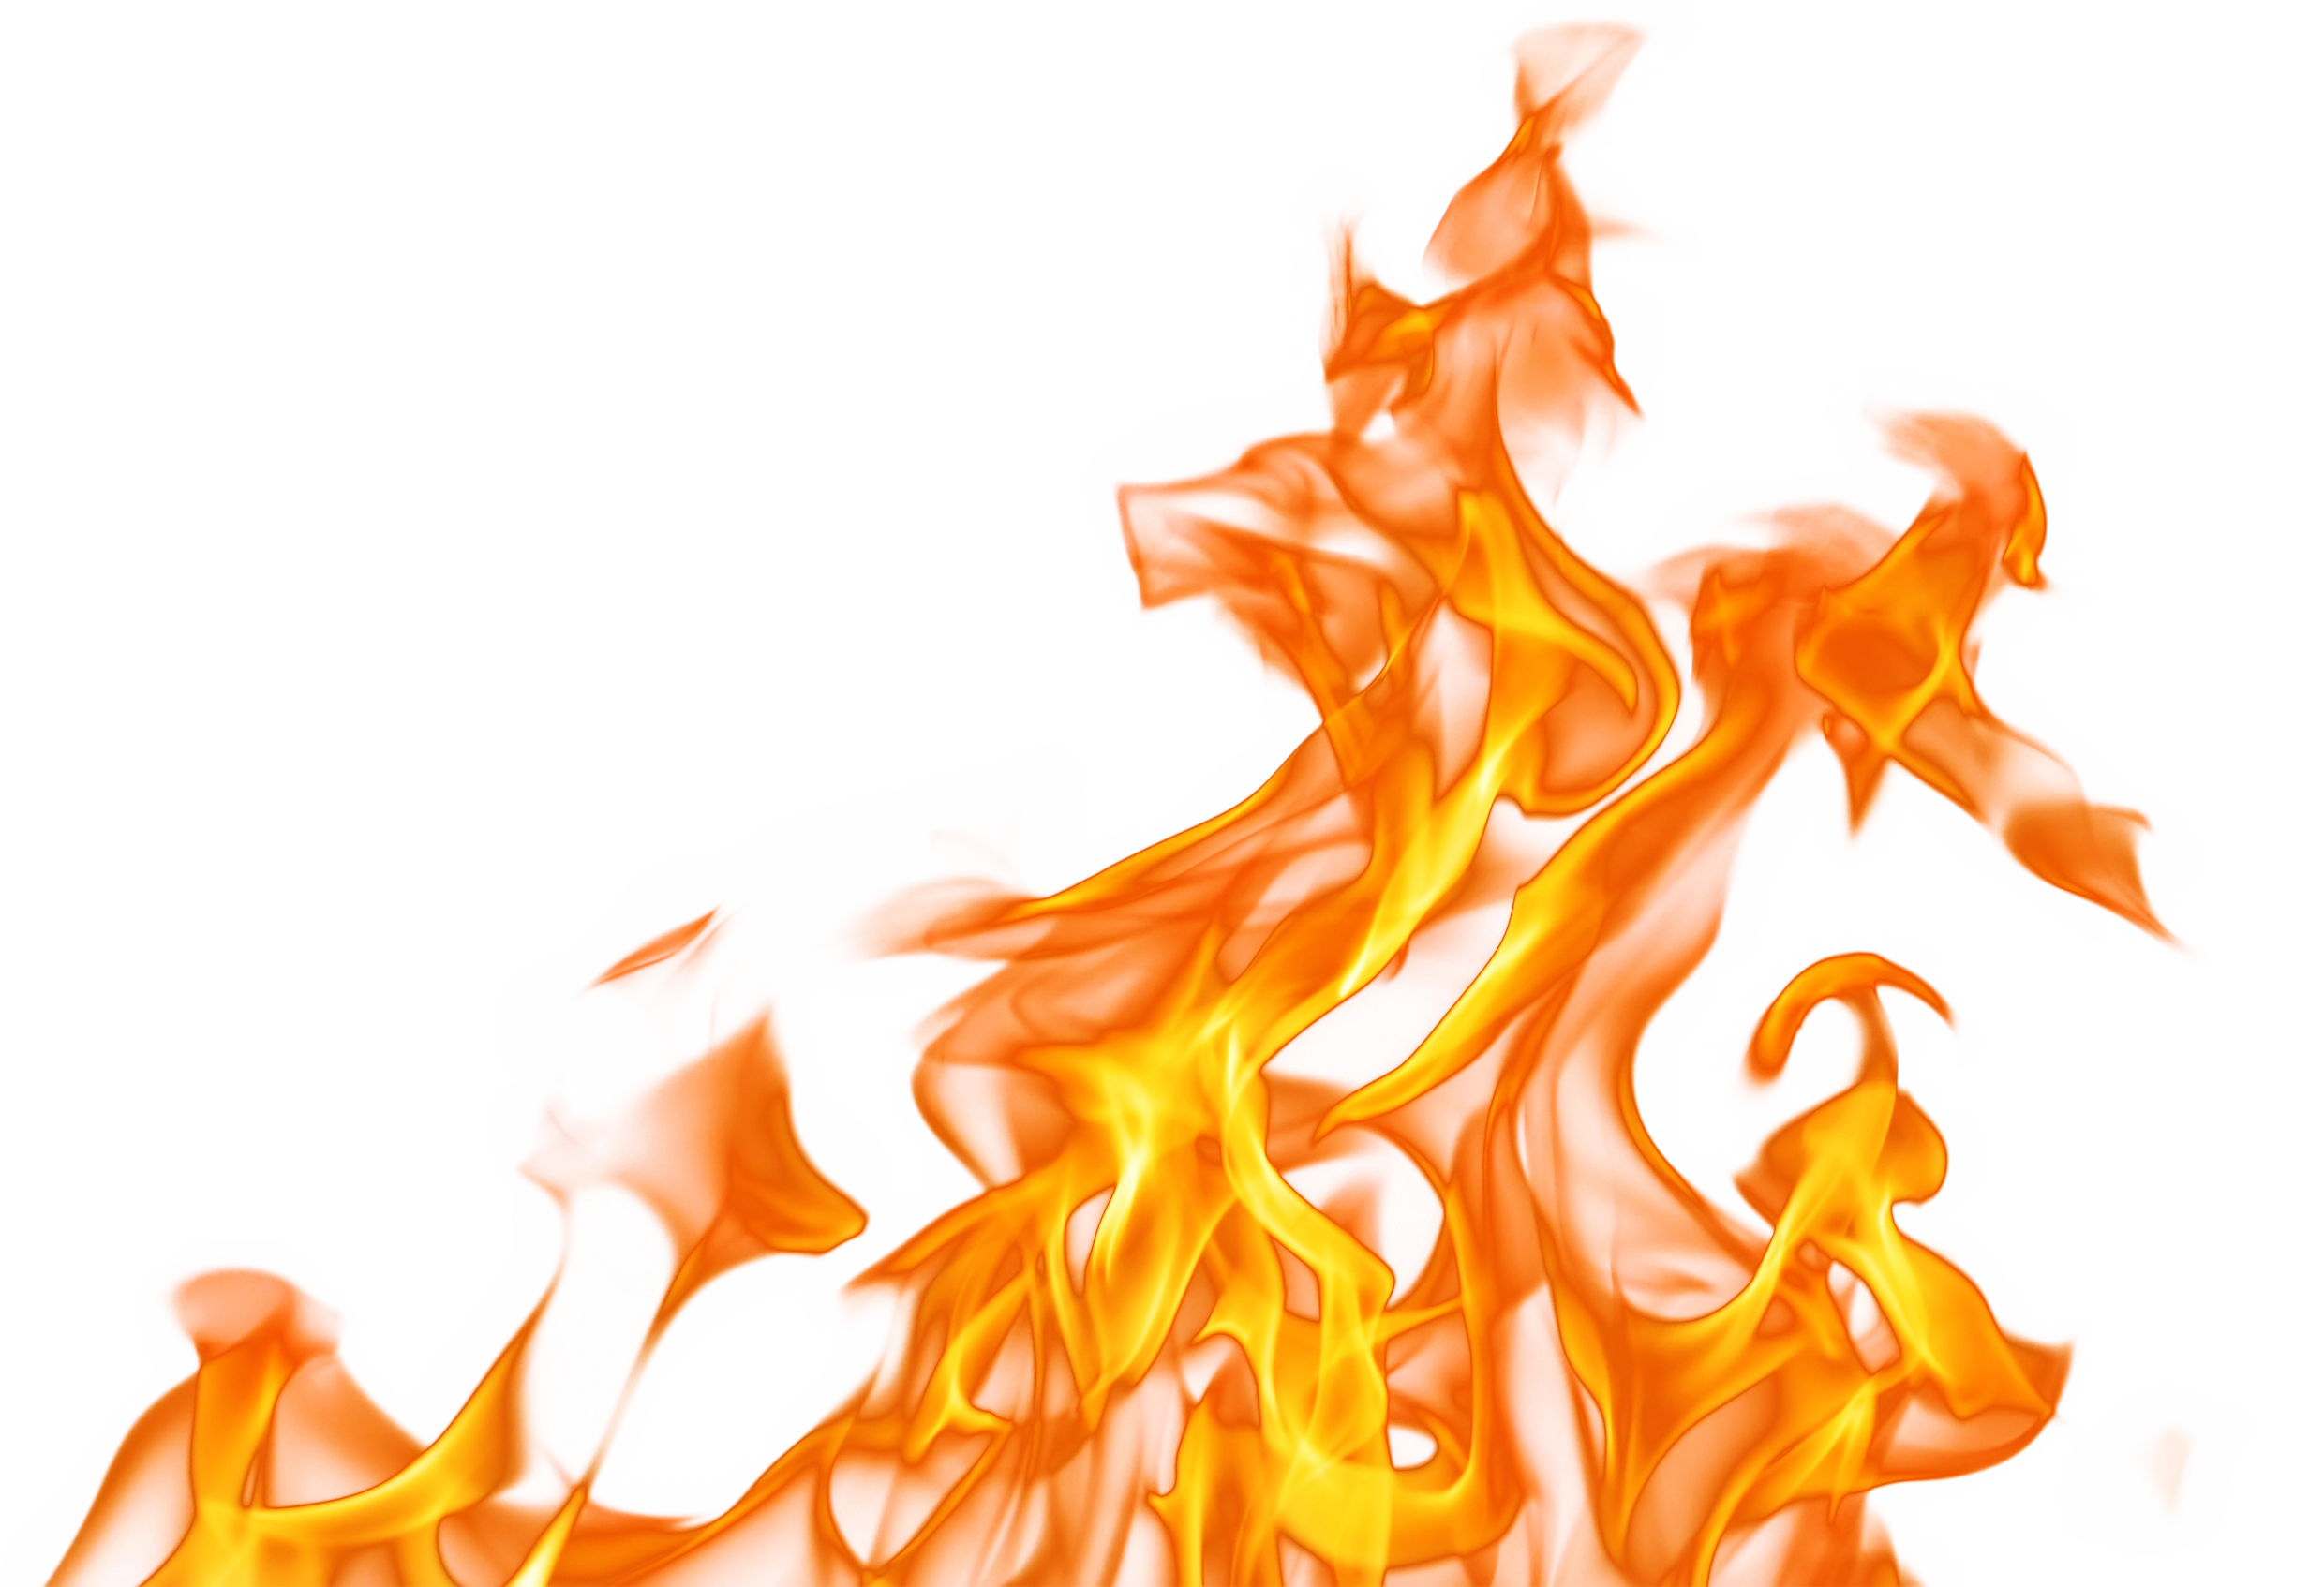 Flames fire spark